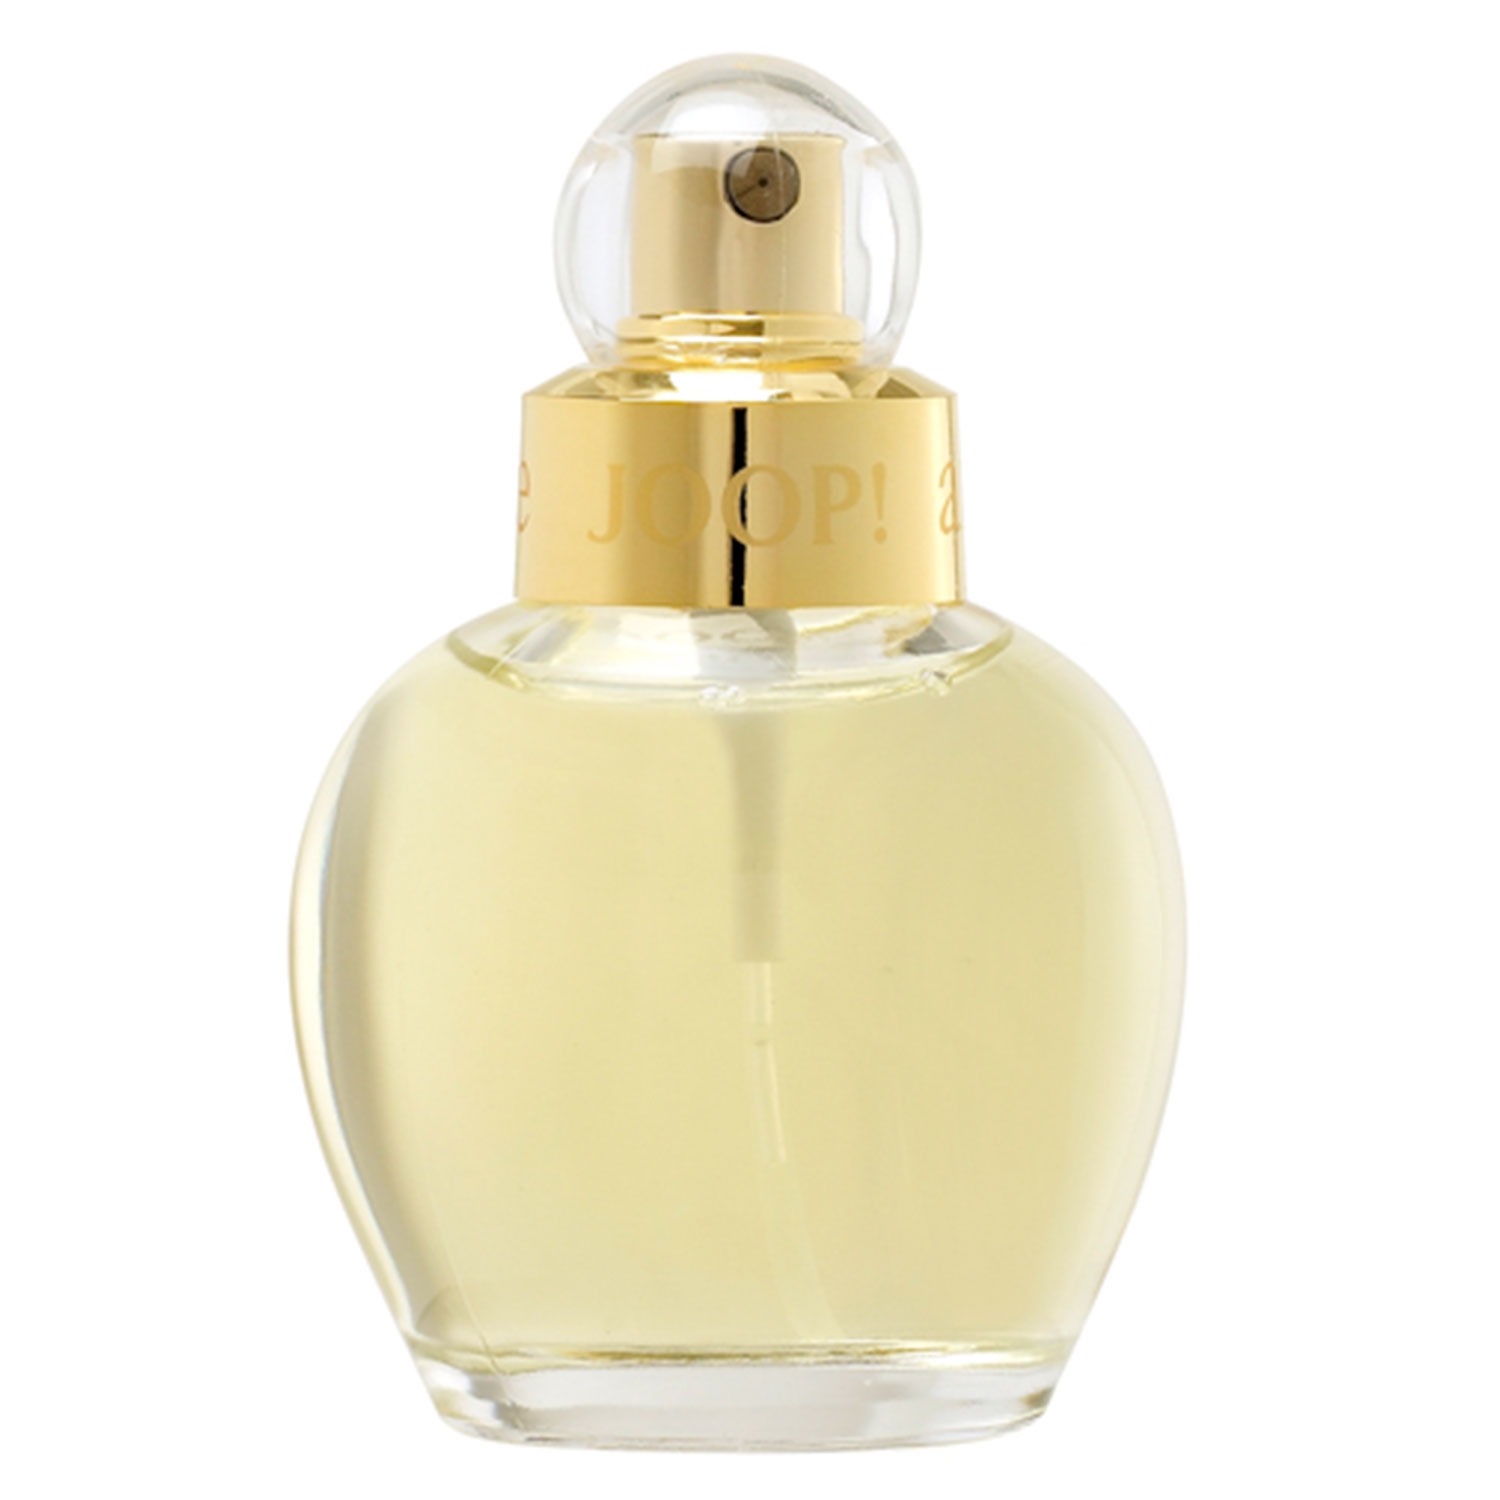 Product image from Joop! All About Eve - Eau de Parfum